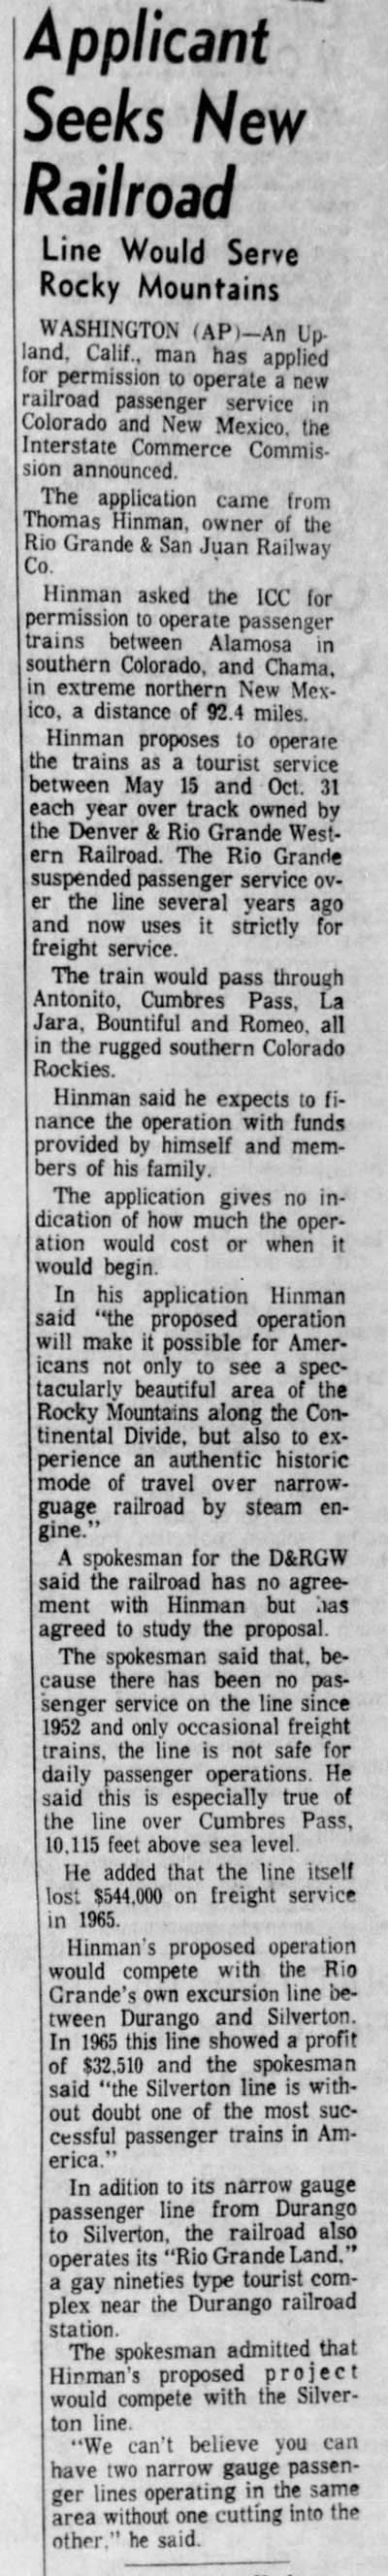 Arizona_Daily_Star_Thu__Feb_23__1967_400.jpg